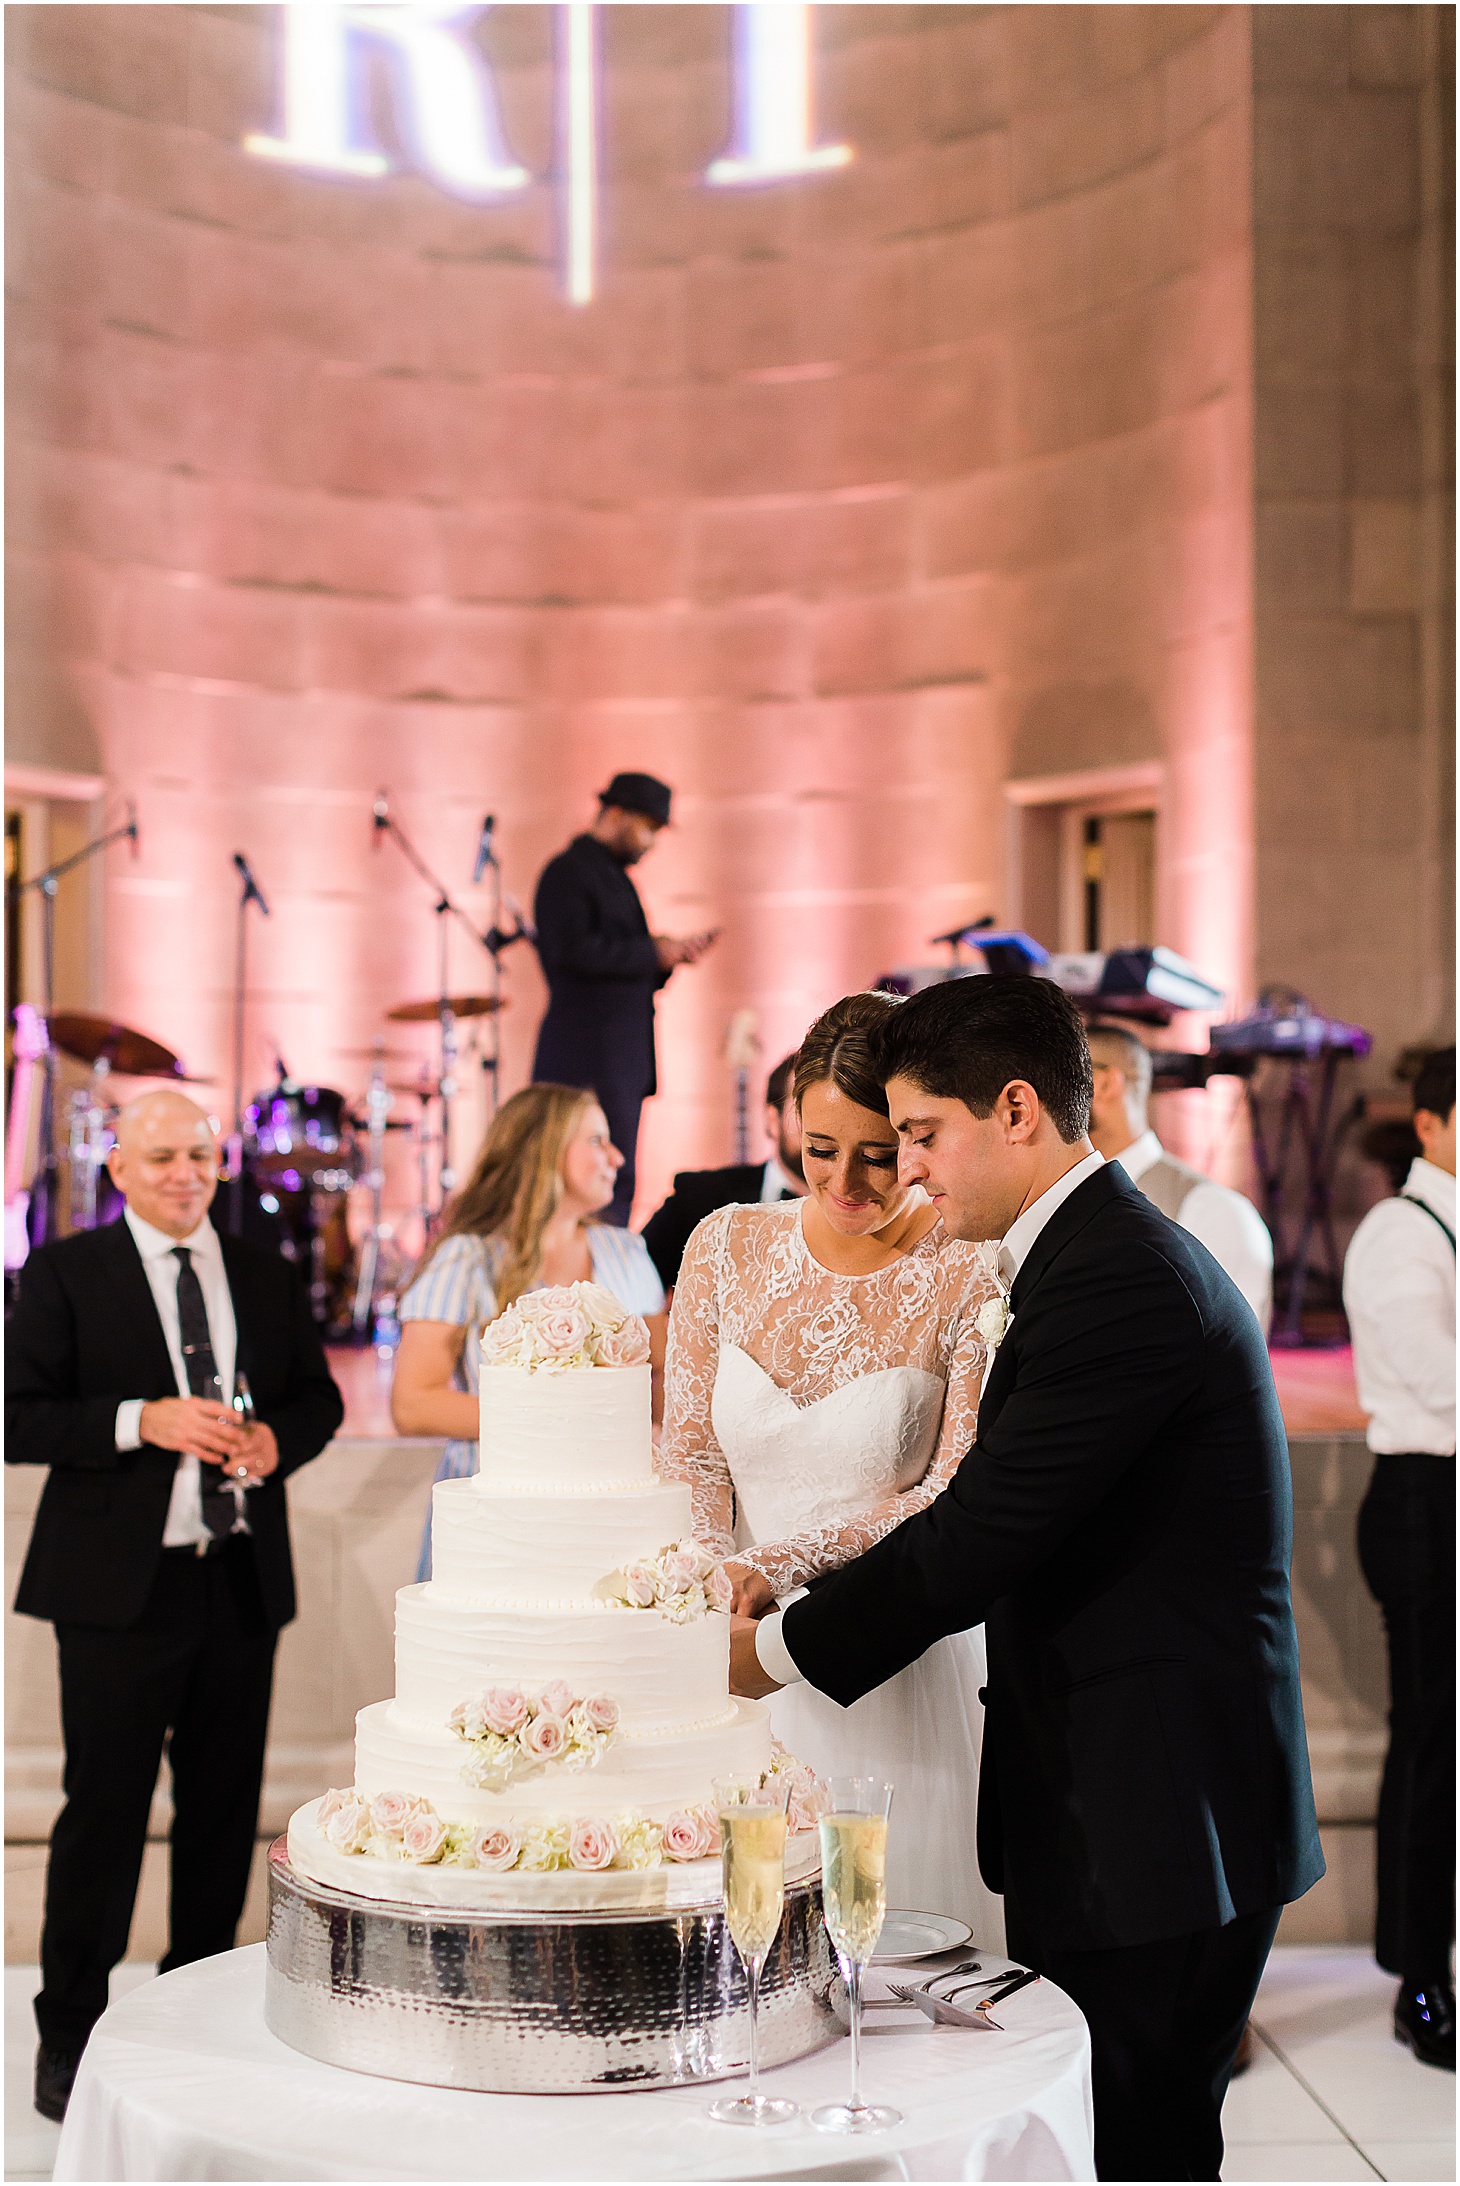 Wedding Reception at Andrew Mellon Auditorium, Sarah Bradshaw Photography, DC Wedding Photographer